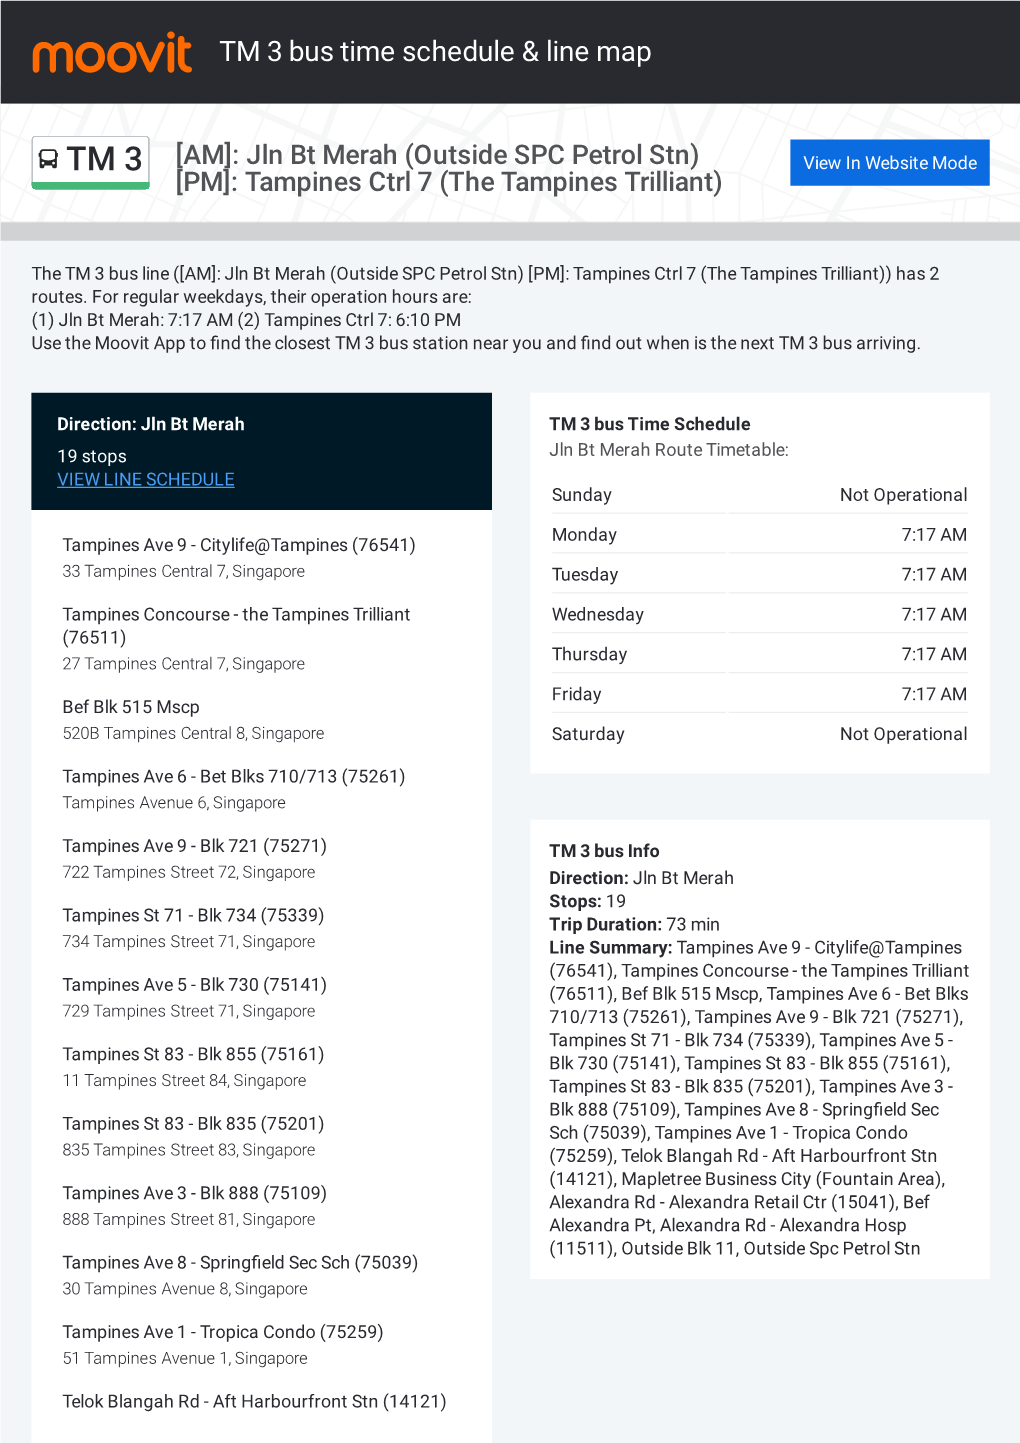 TM 3 Bus Time Schedule & Line Route